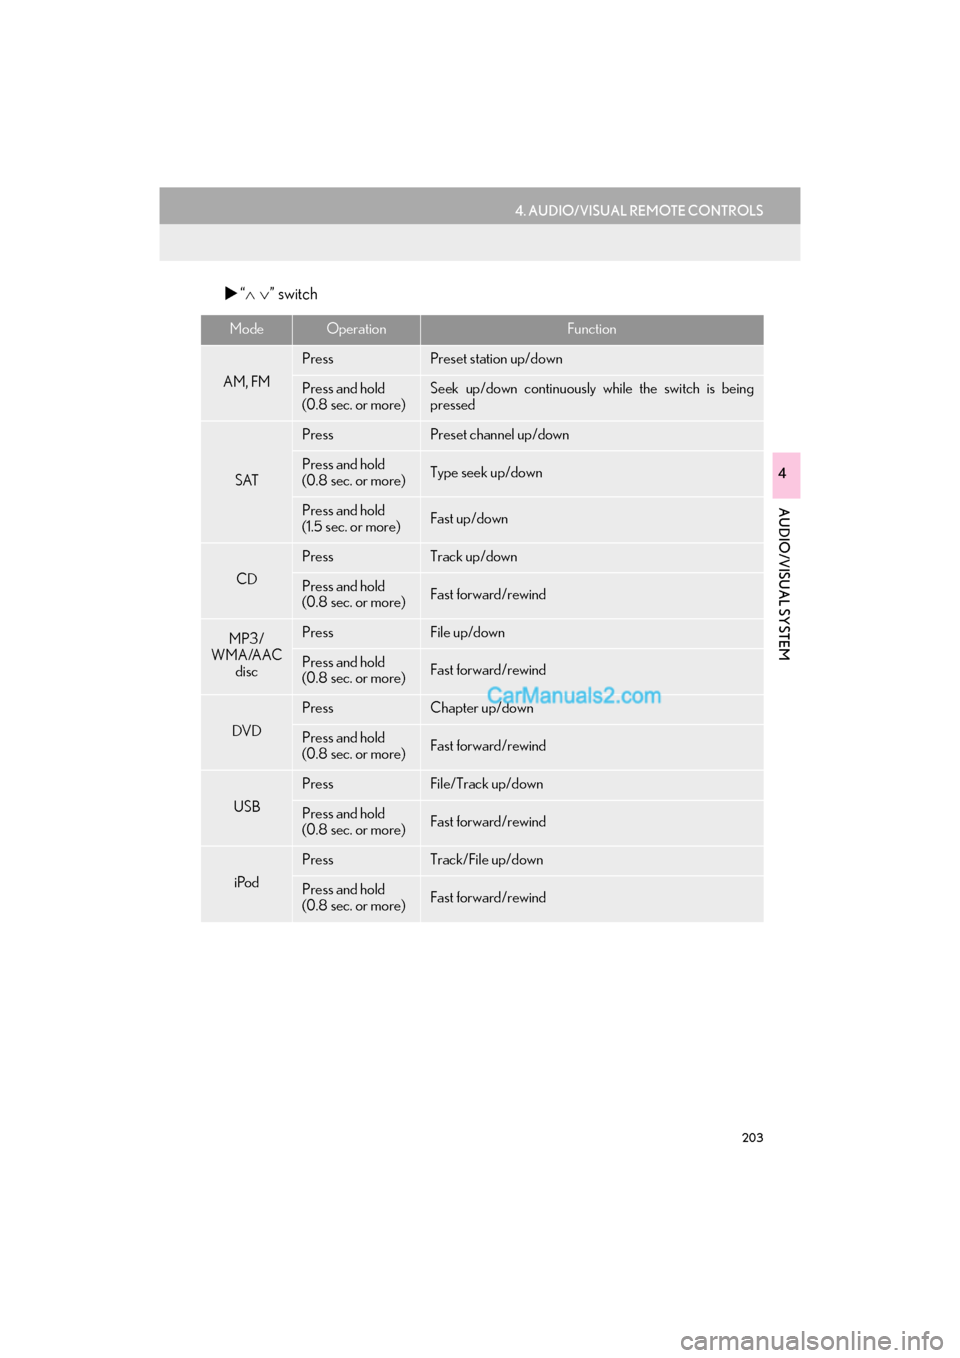 Lexus GS F 2016  Navigation Manual 203
4. AUDIO/VISUAL REMOTE CONTROLS
GS_Navi+MM_OM30F12U_(U)15.09.01     12:20
AUDIO/VISUAL SYSTEM
4
�X“∧∨ ” switch
ModeOperationFunction
AM, FM
PressPreset station up/down
Press and hold 
(0.8